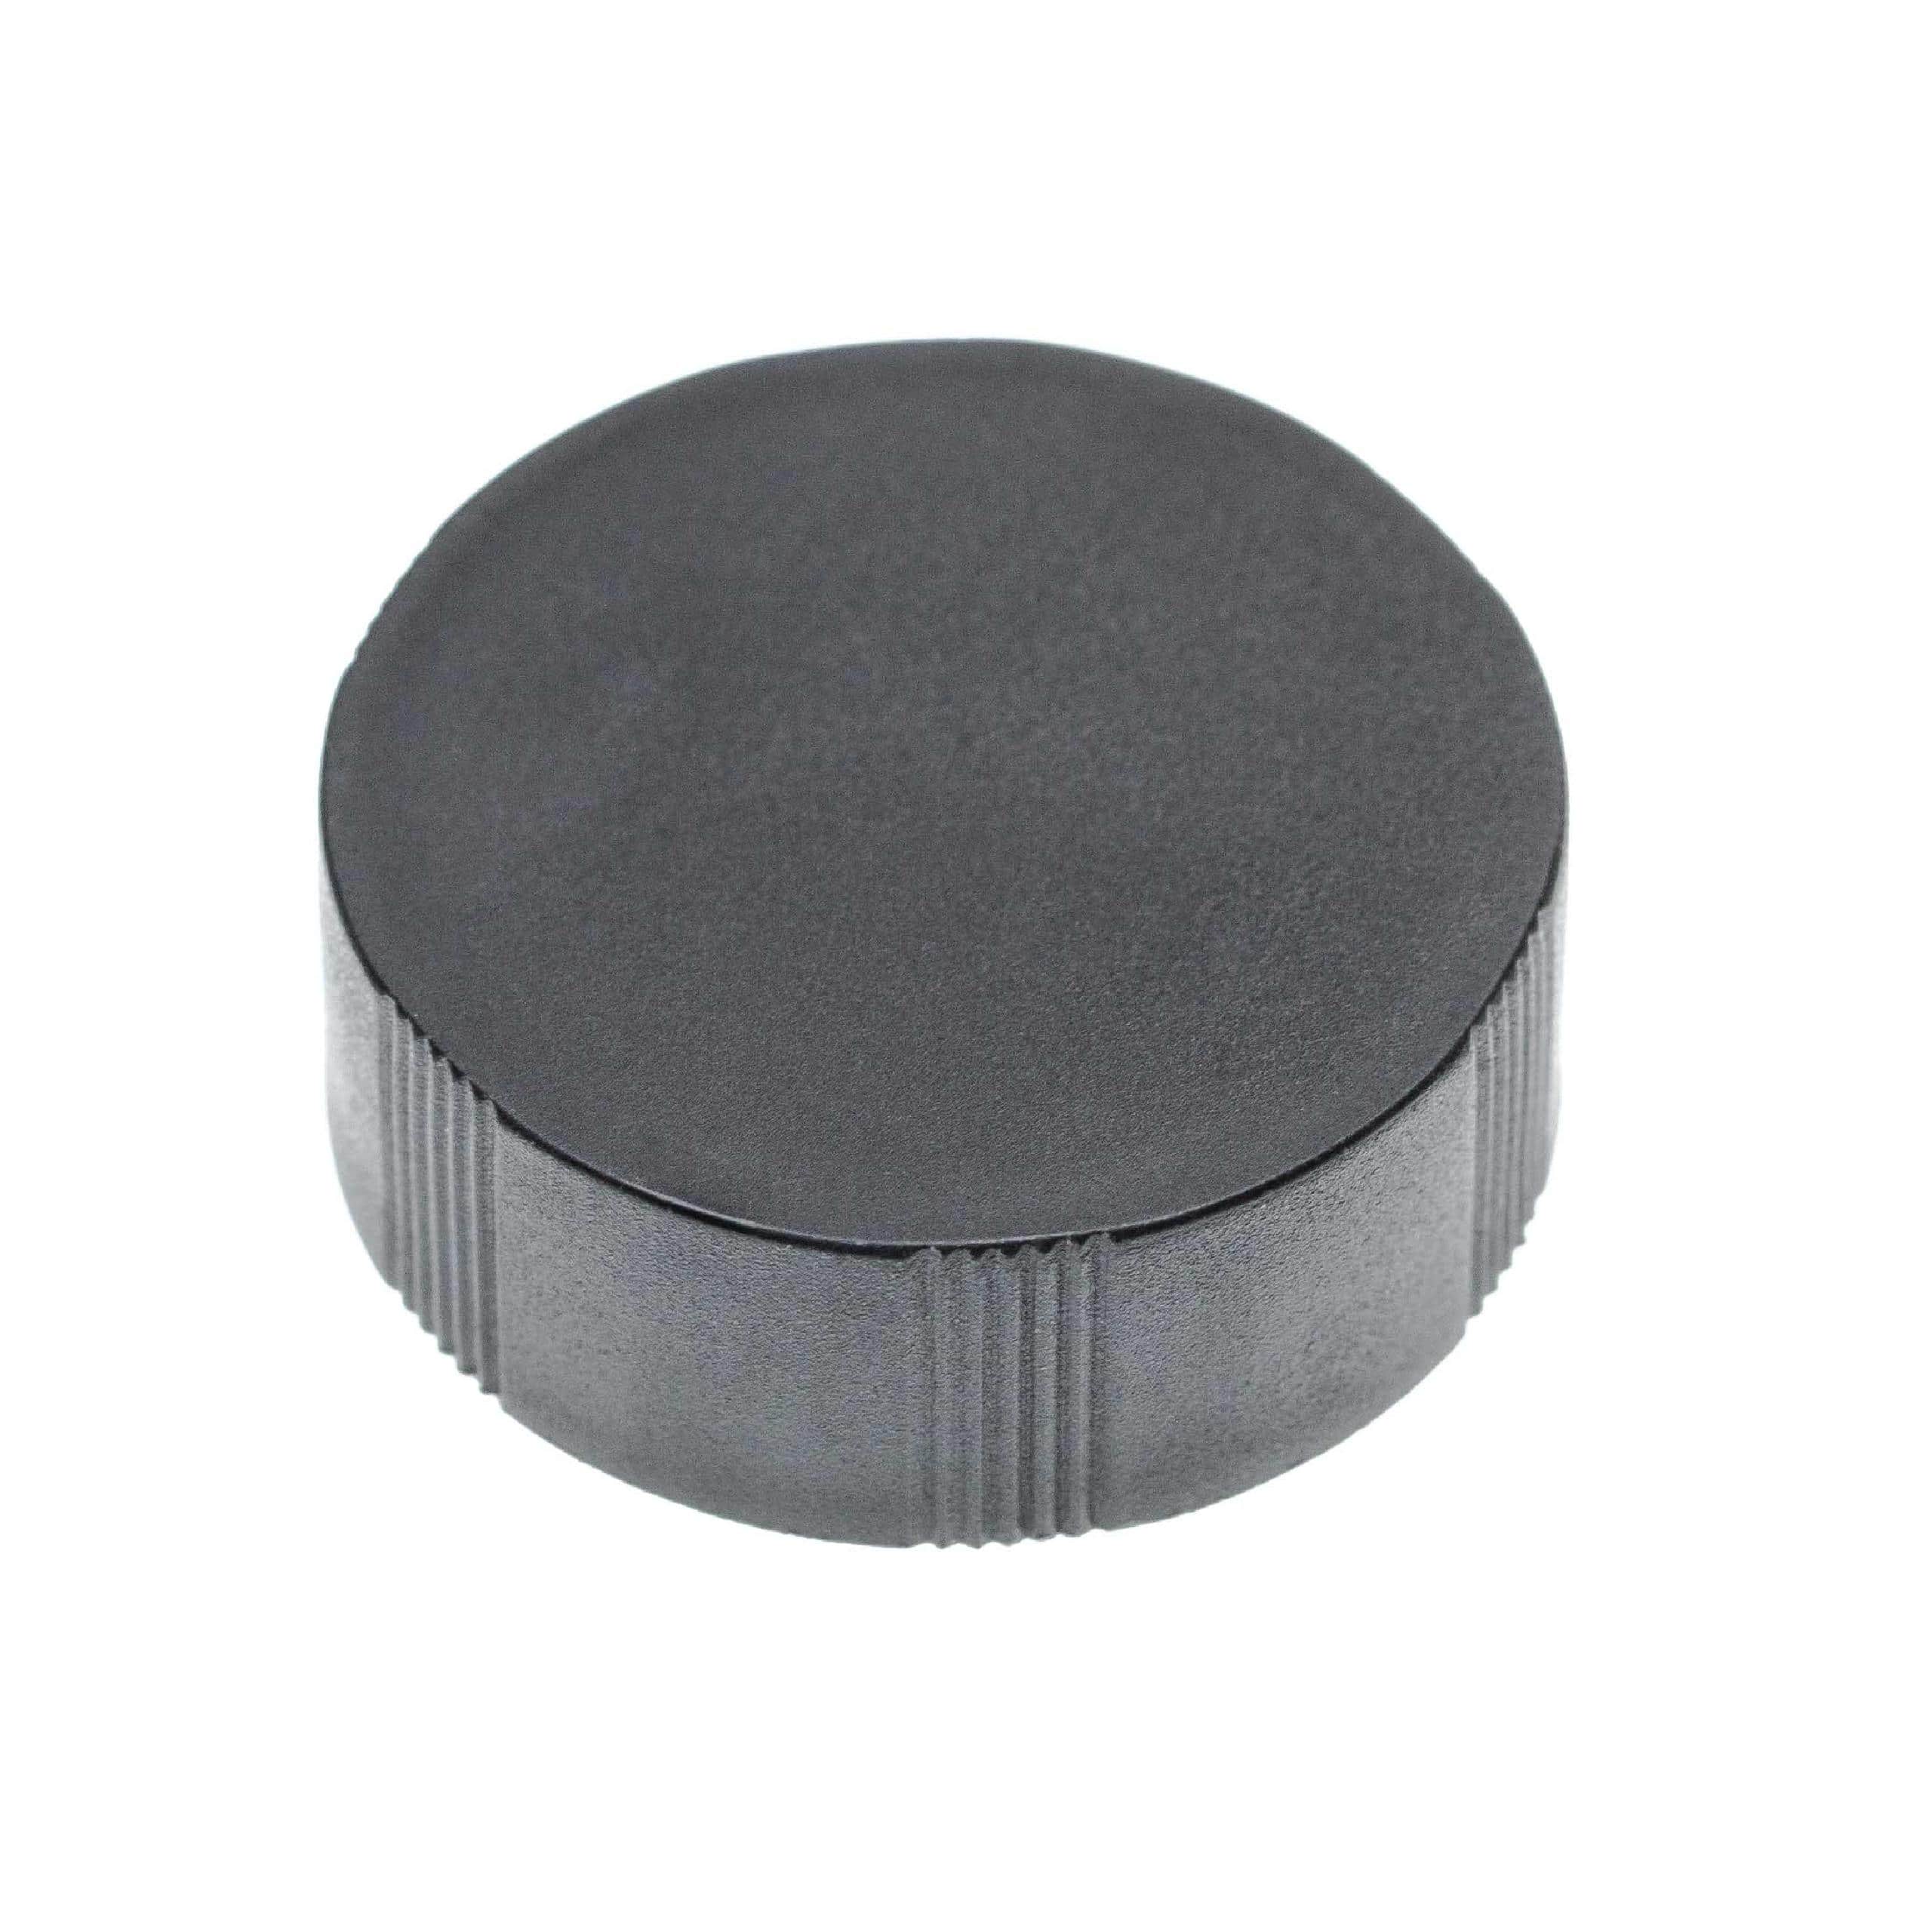 Tapa objetivo para prismáticos con diámetro de 30 mm - negro, acoplable